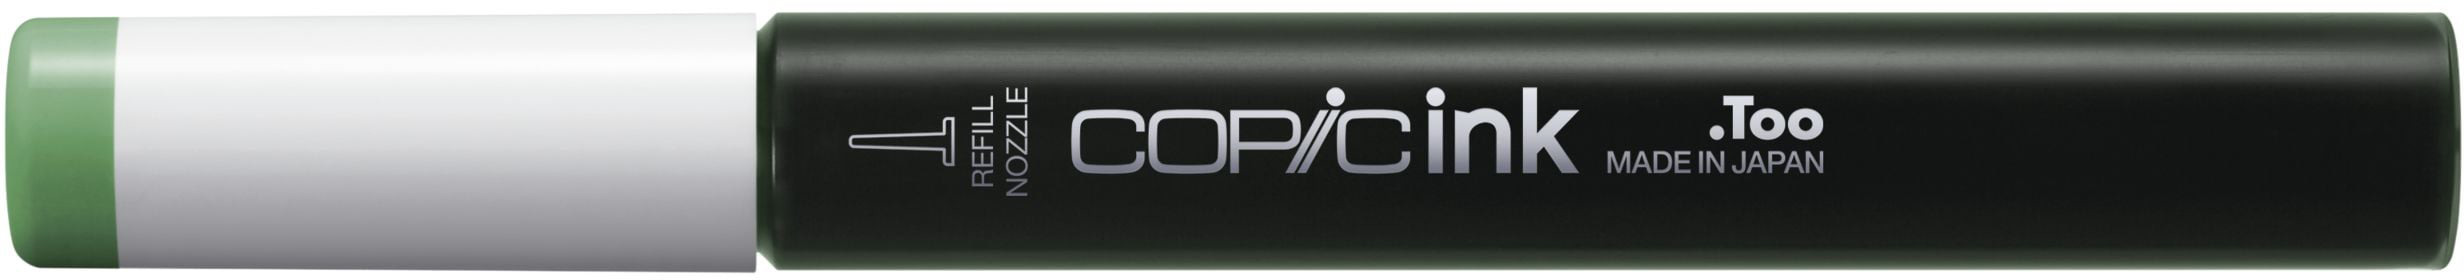 COPIC Ink Refill 21076203 YG45 - Cobalt Green